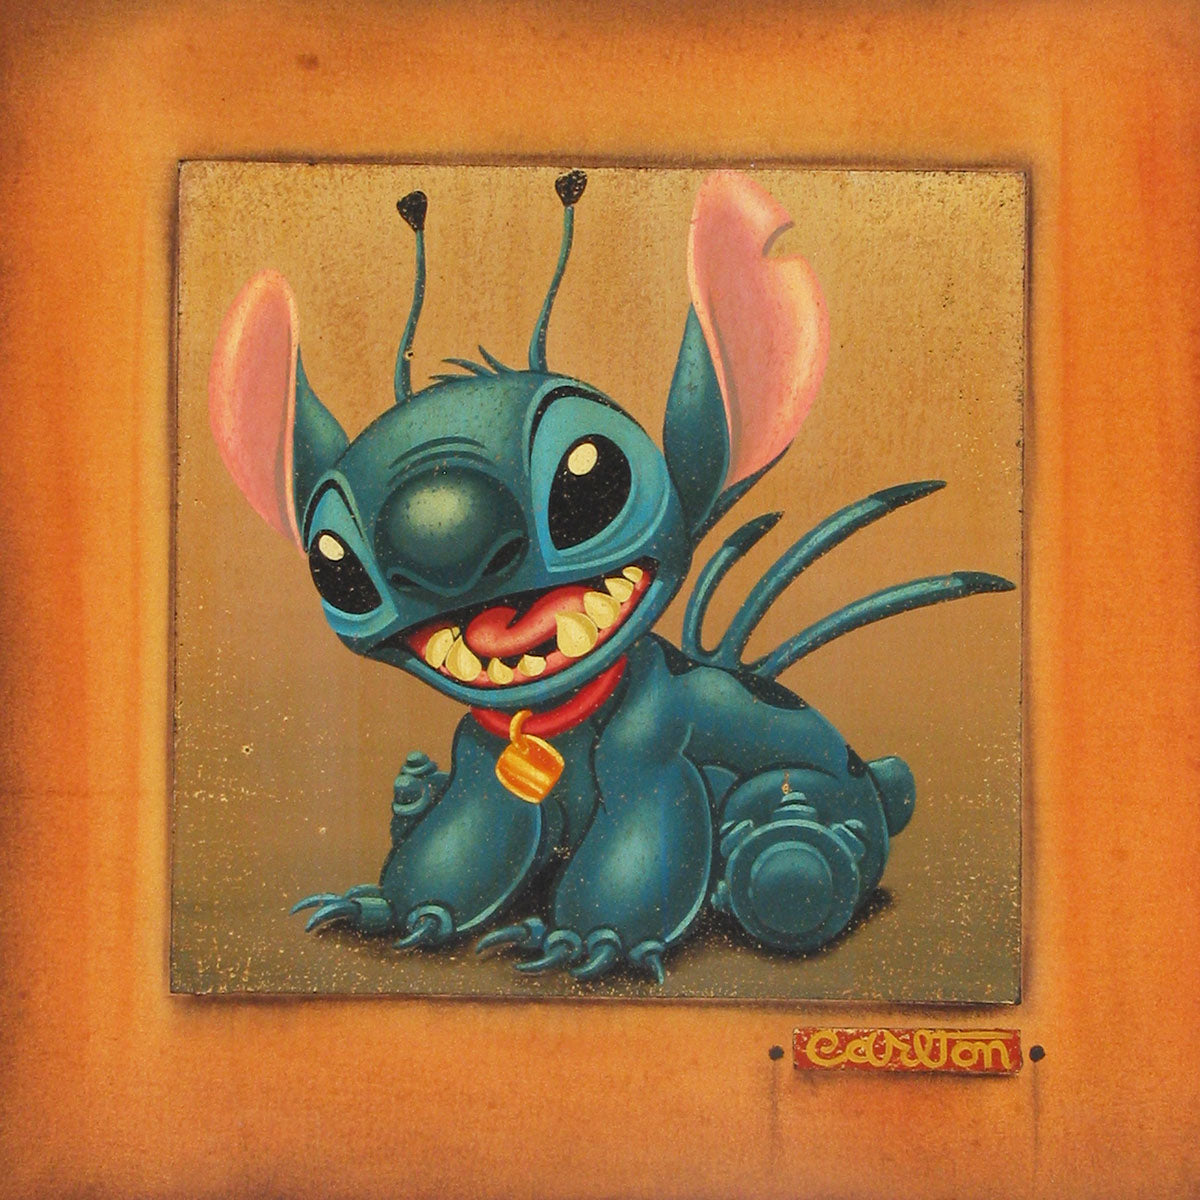 Lilo & Stitch - Limited Edition Canvas